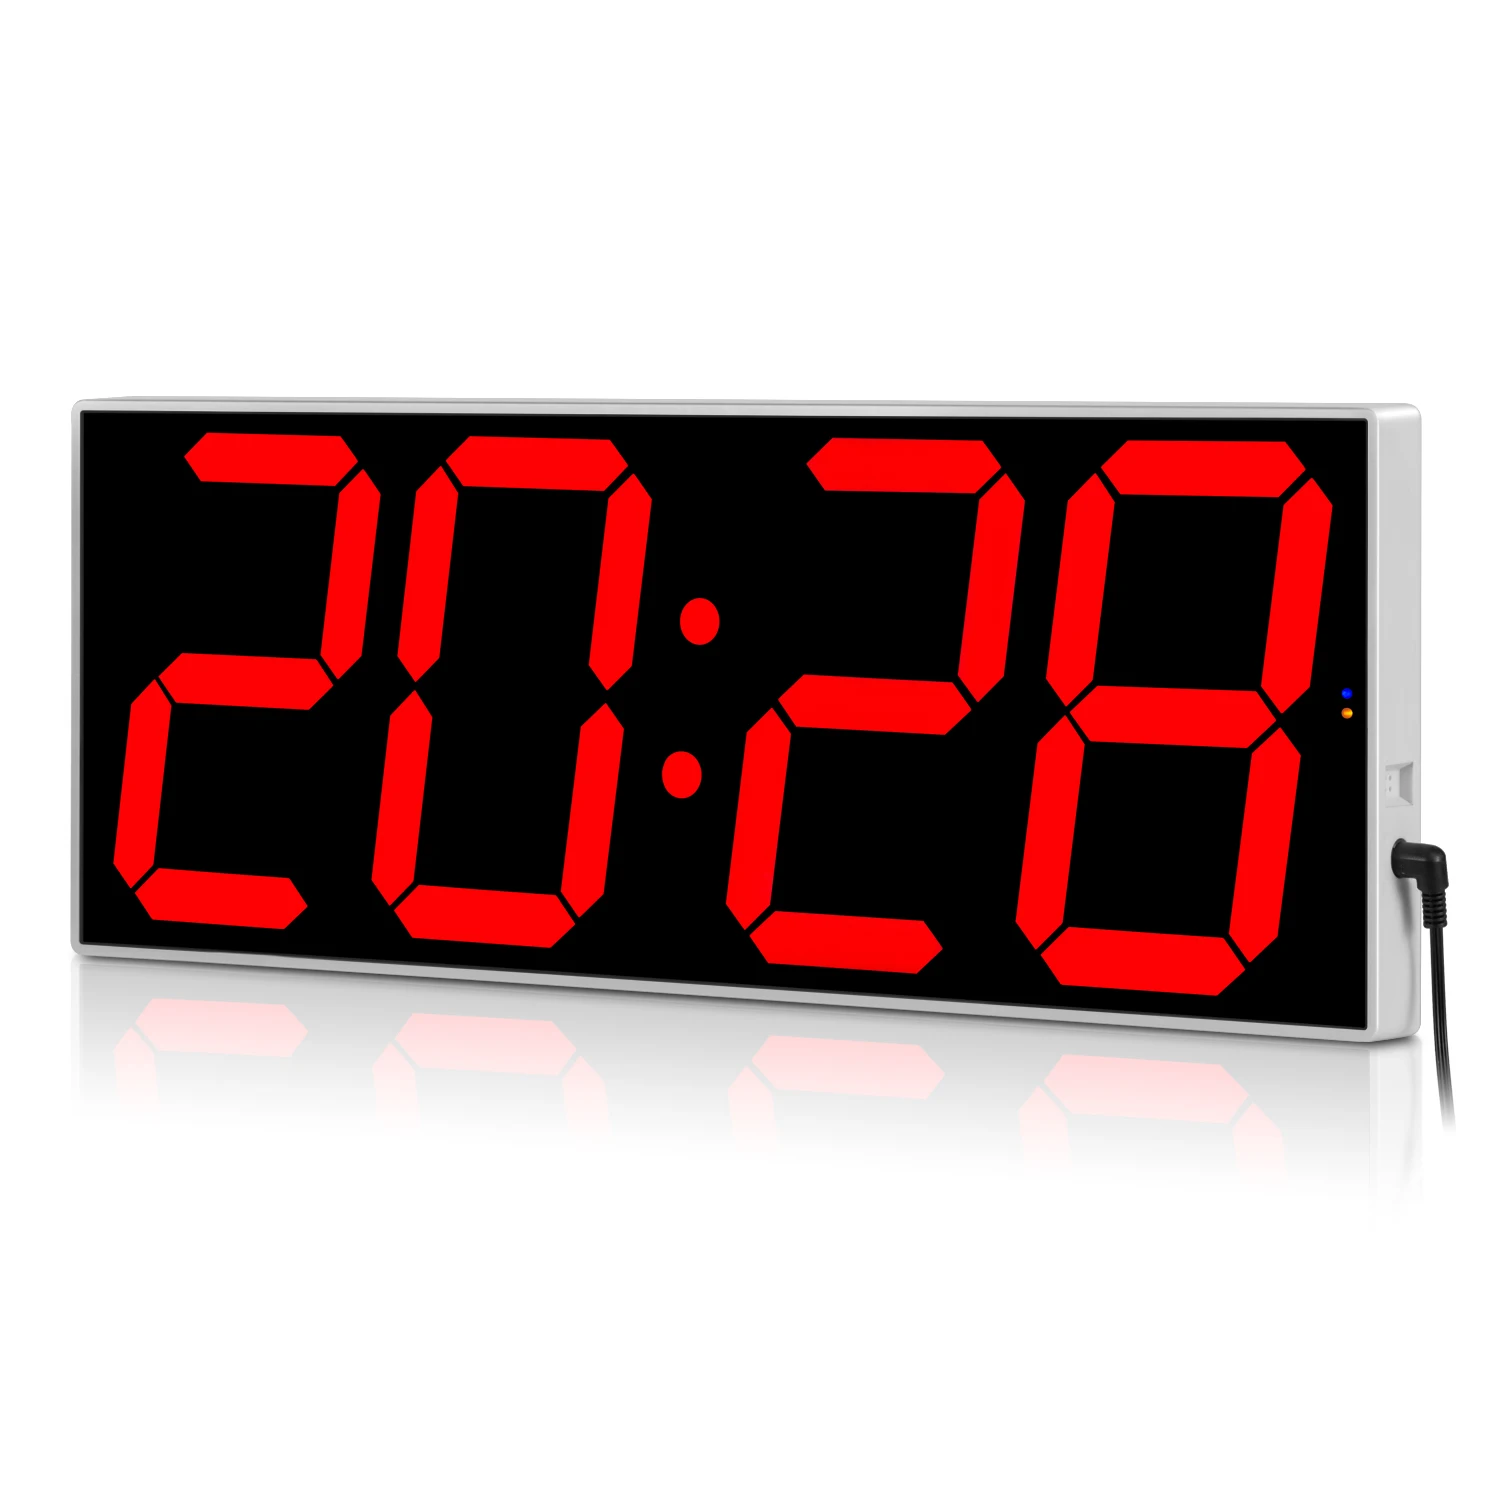 6" Large Digital LED Wall Clock